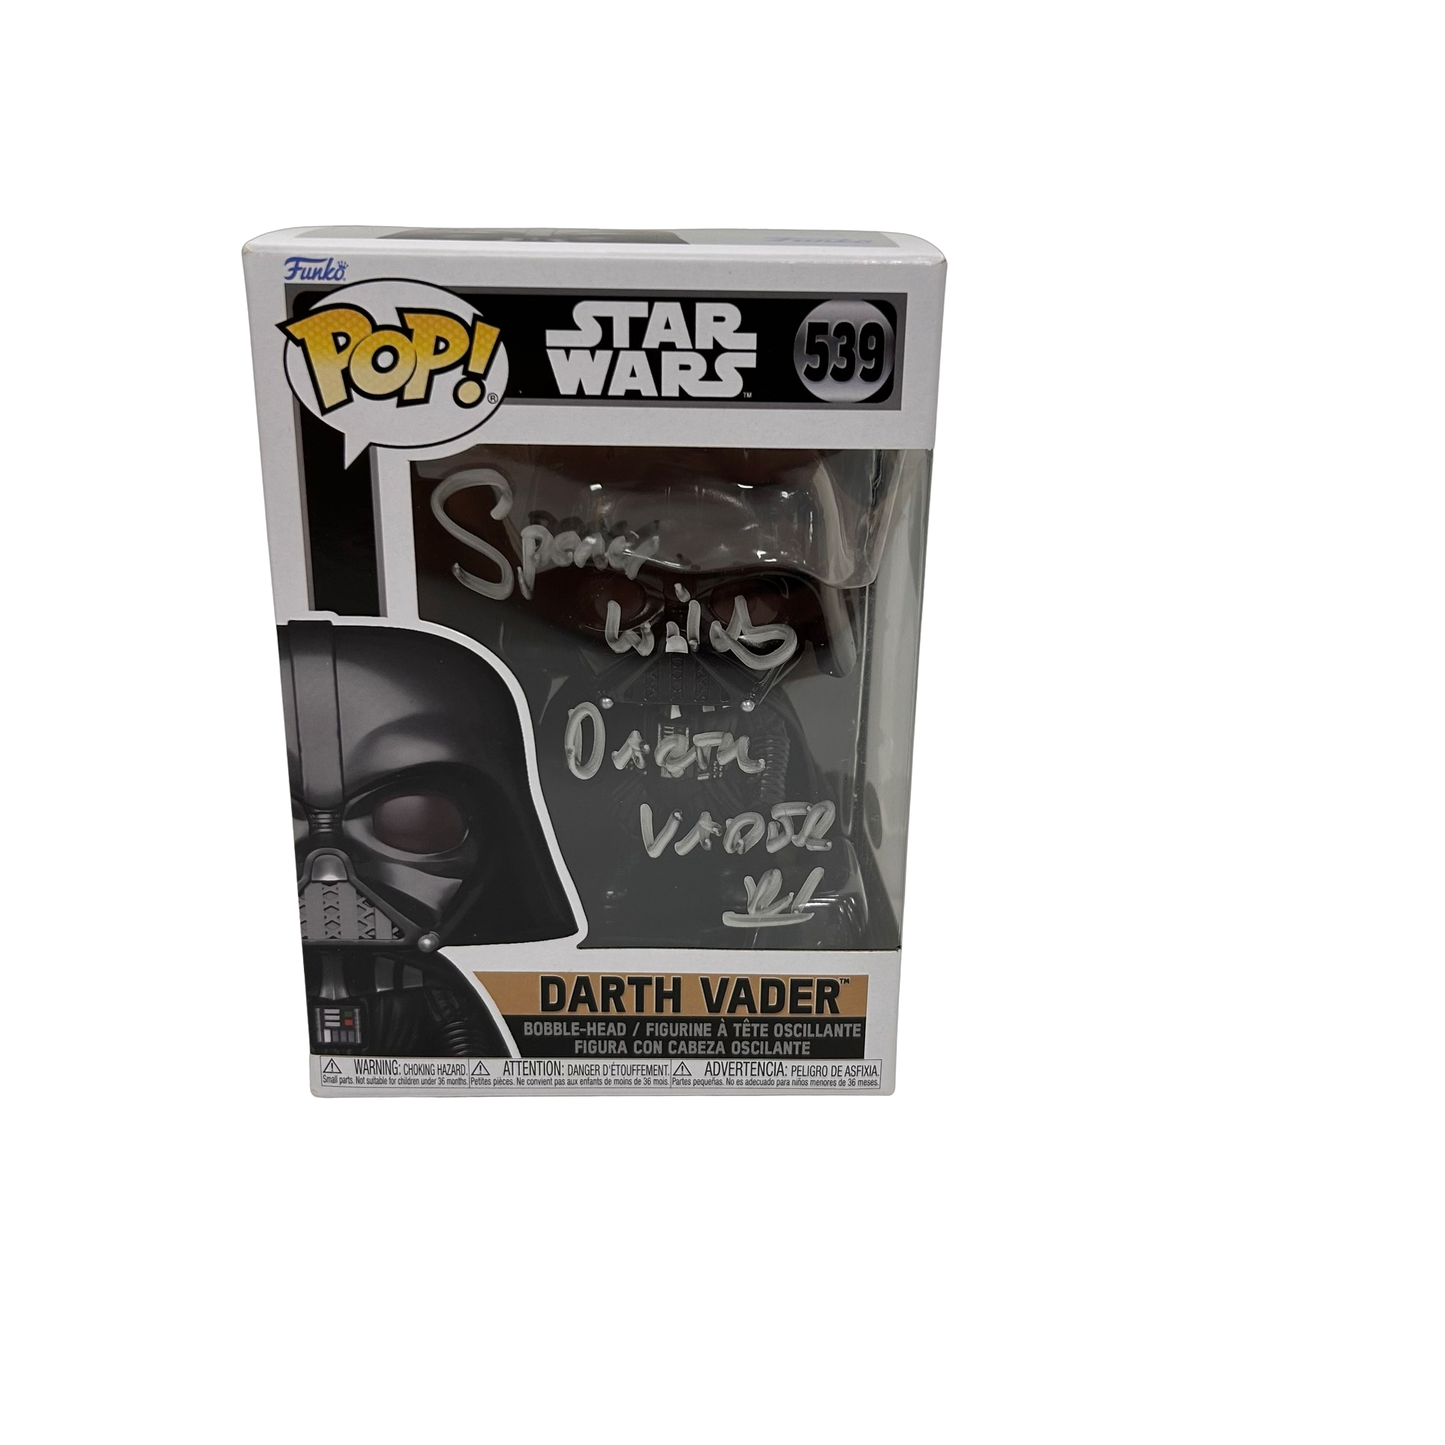 Spencer Wilding Autographed Darth Vader Funko Pop "Darth Vader" Inscription JSA